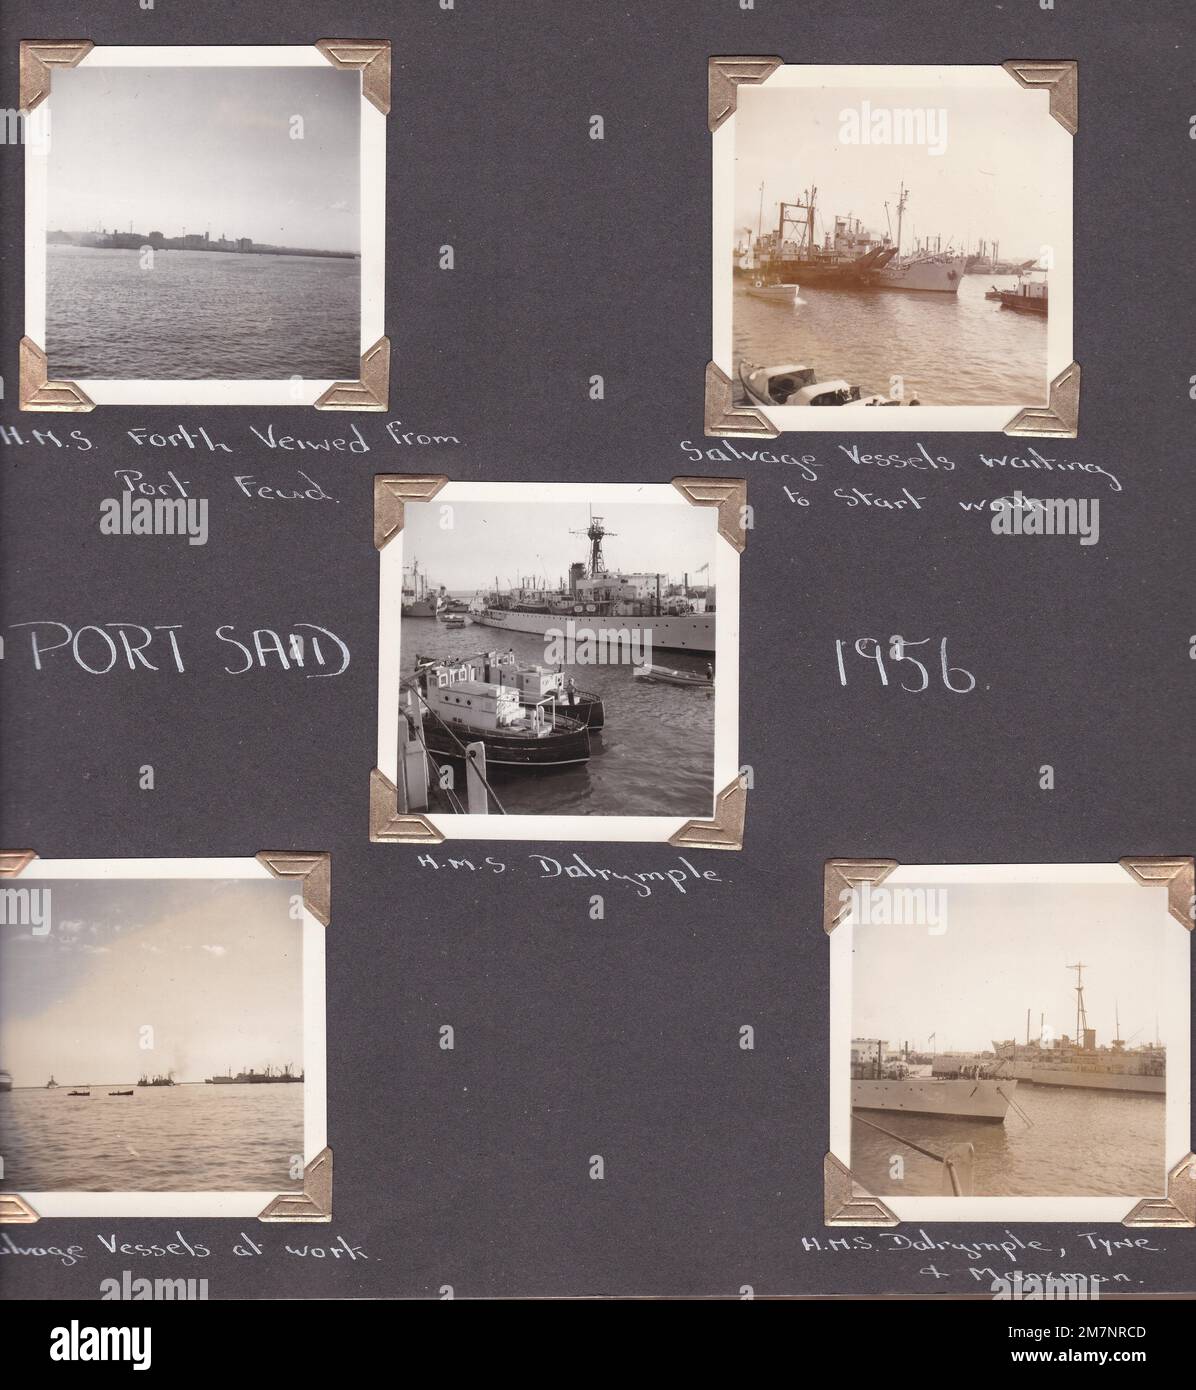 Vintage photo album page of a servicing Naval seaman 1956 - 1957. Stock Photo